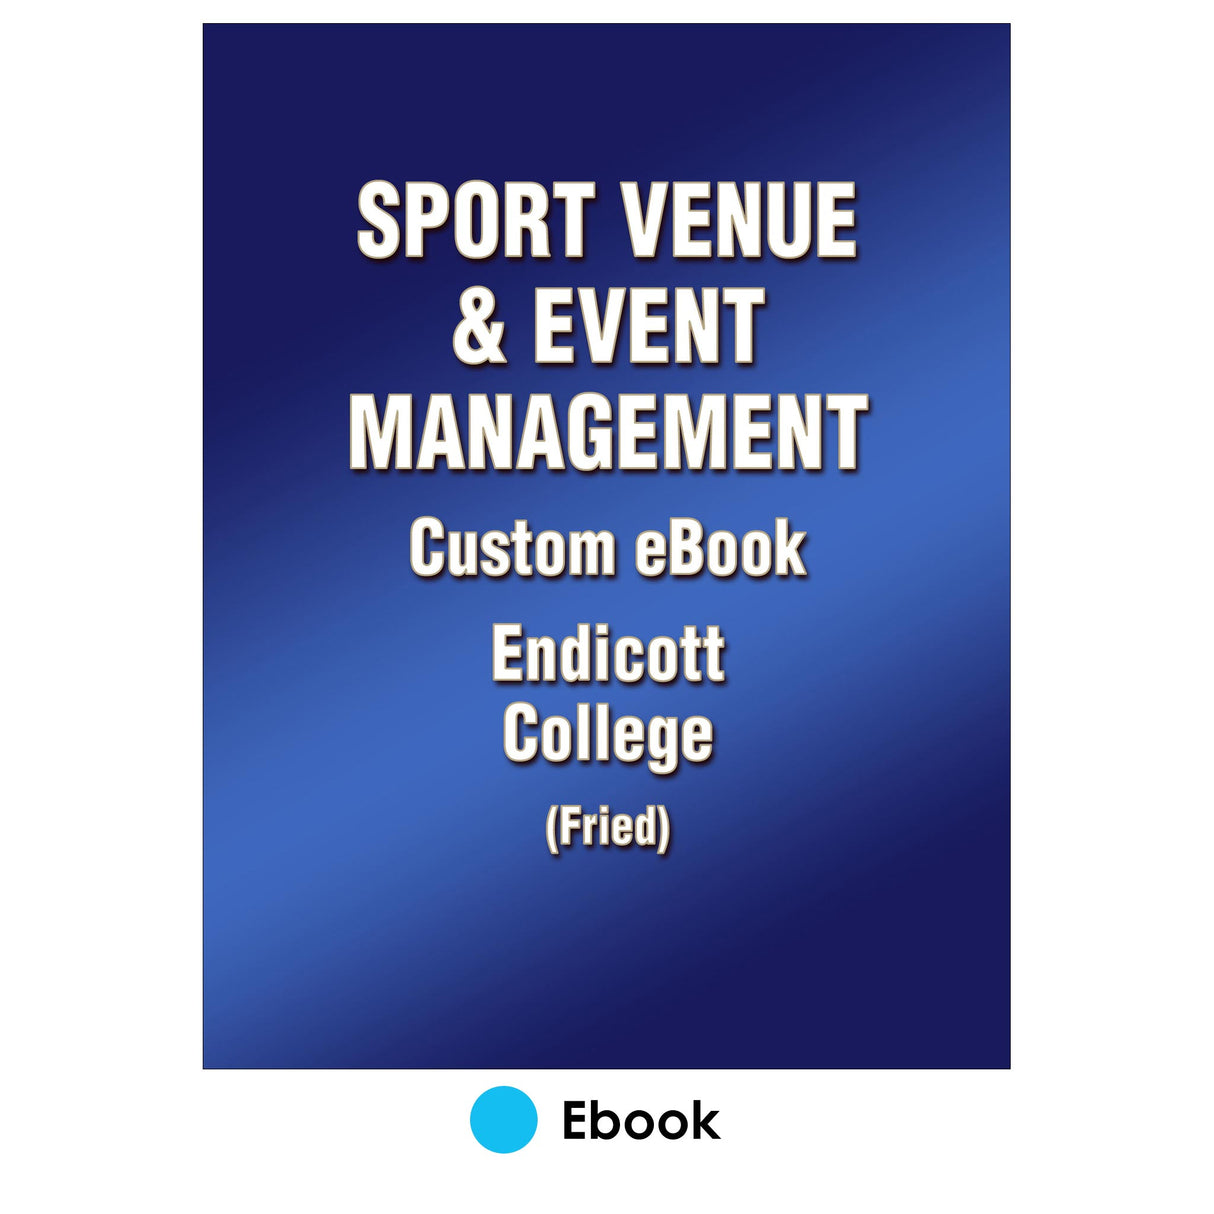 Sport Venue and Event Management Custom Ebook: Endicott College (Fried)